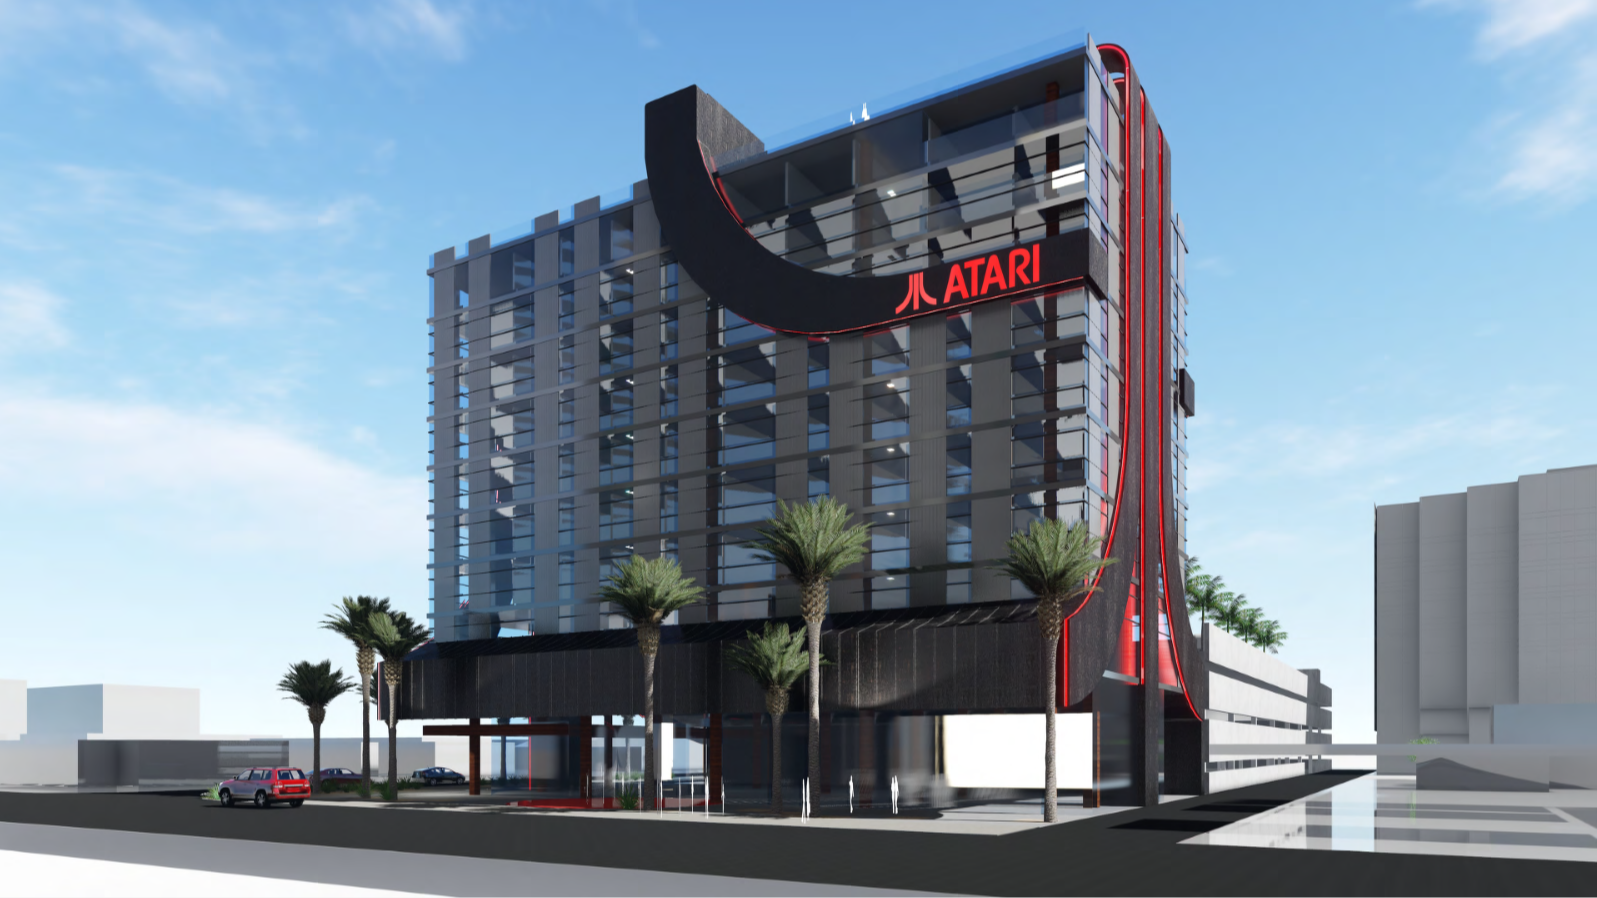 Rendering of the new Atari hotel in daytime